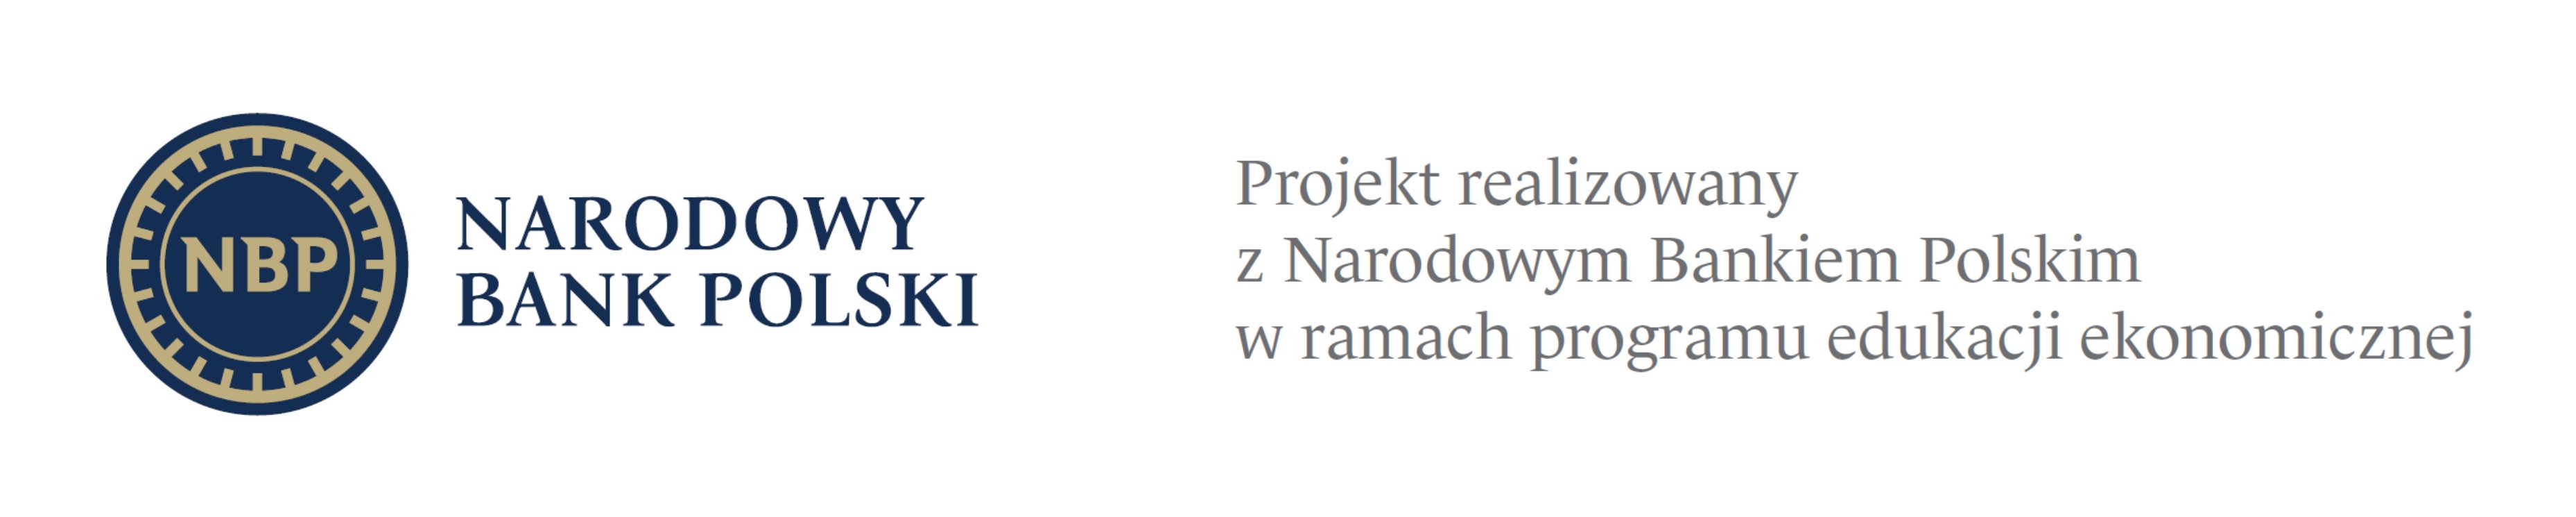 ZNAK_NBP_projekt_realizowany_s.jpg